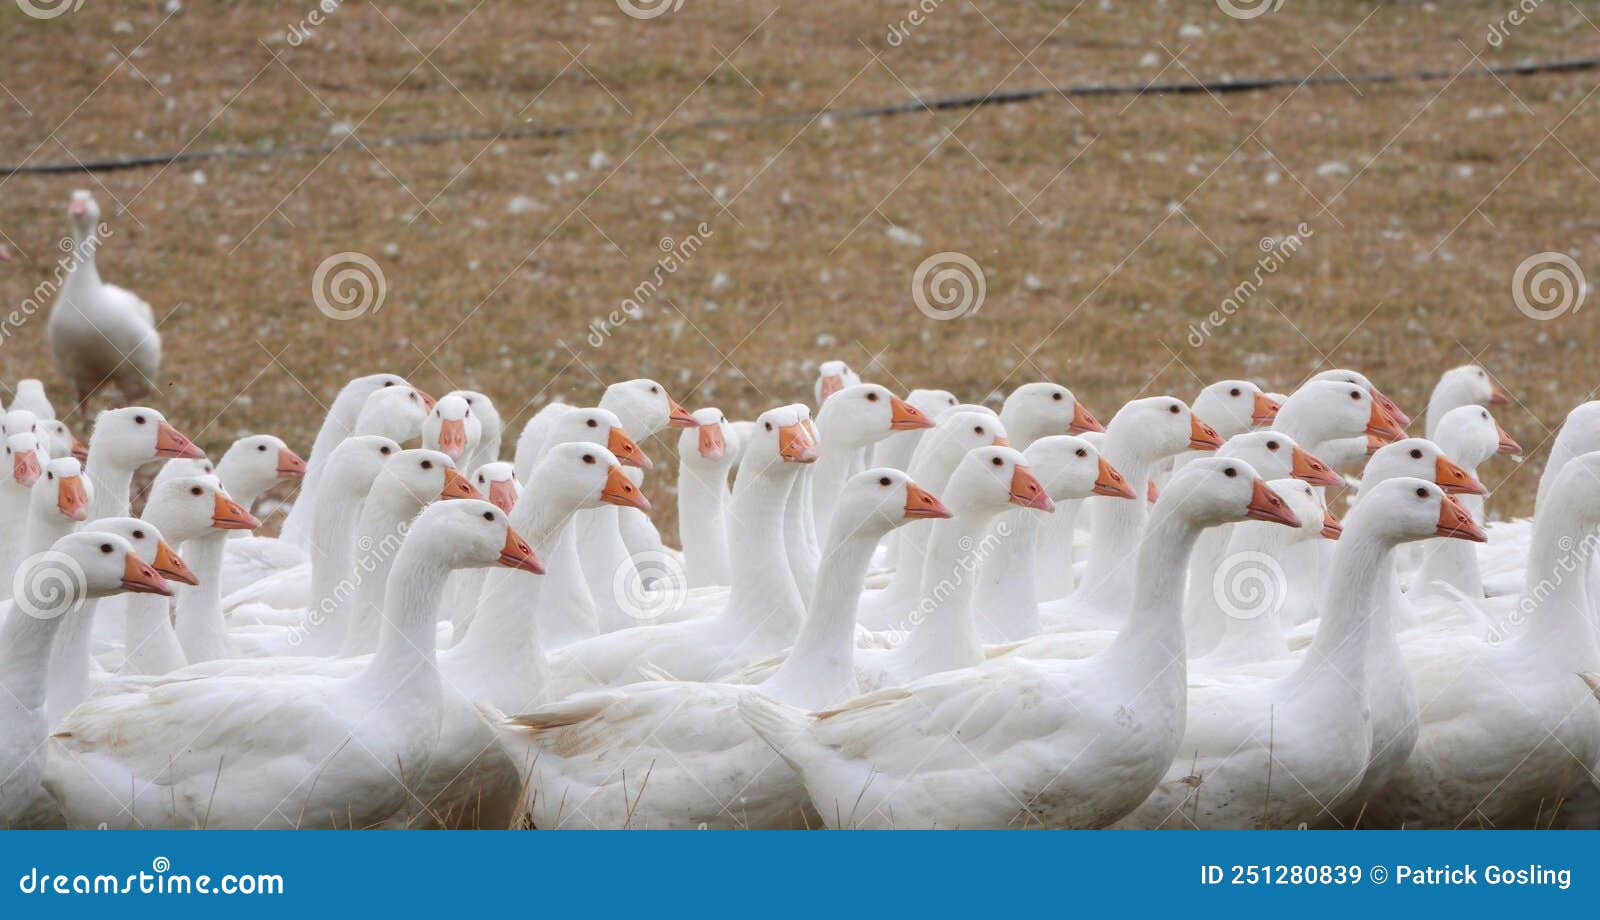 emden geese on commercial goose farm.